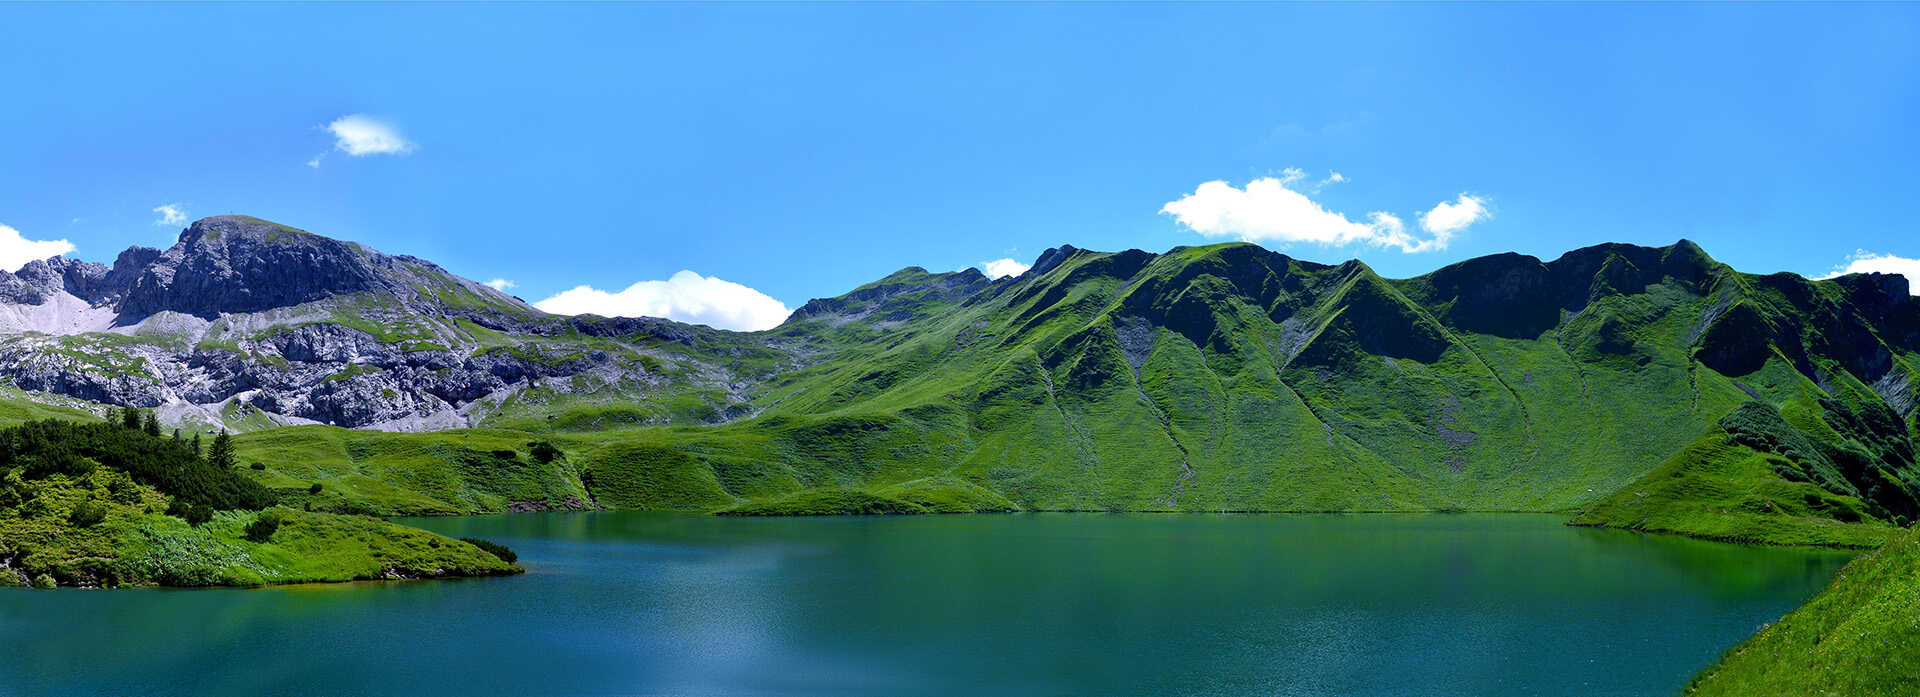 mountains with a lake